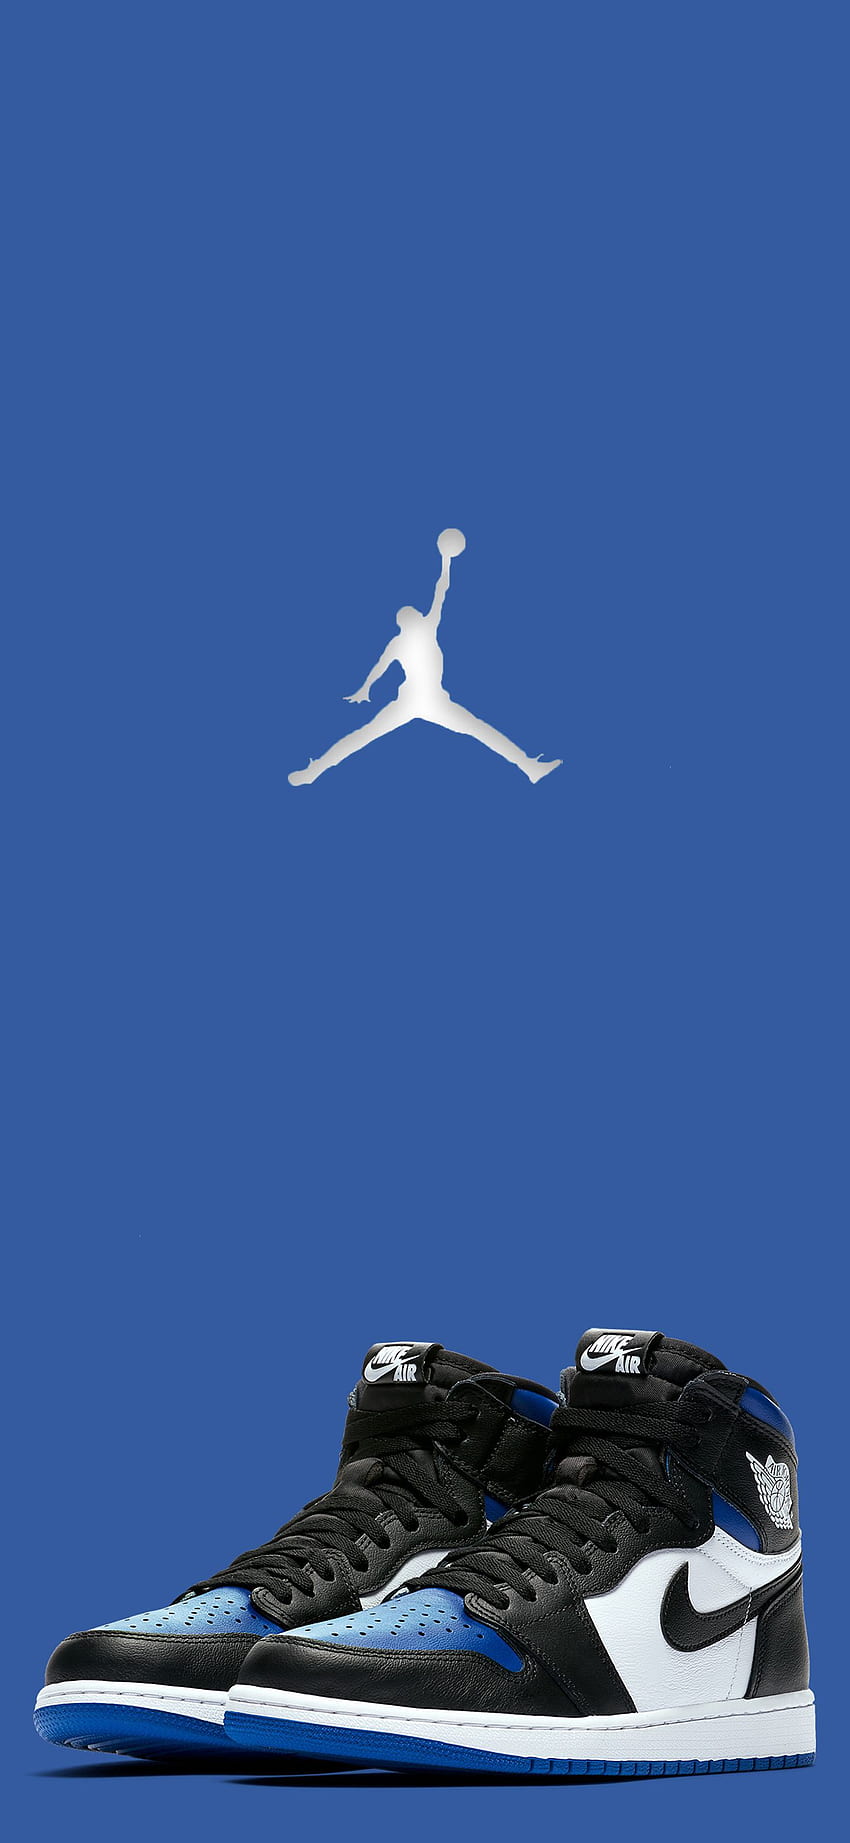 500 Nike Jordan Pictures HD  Download Free Images on Unsplash